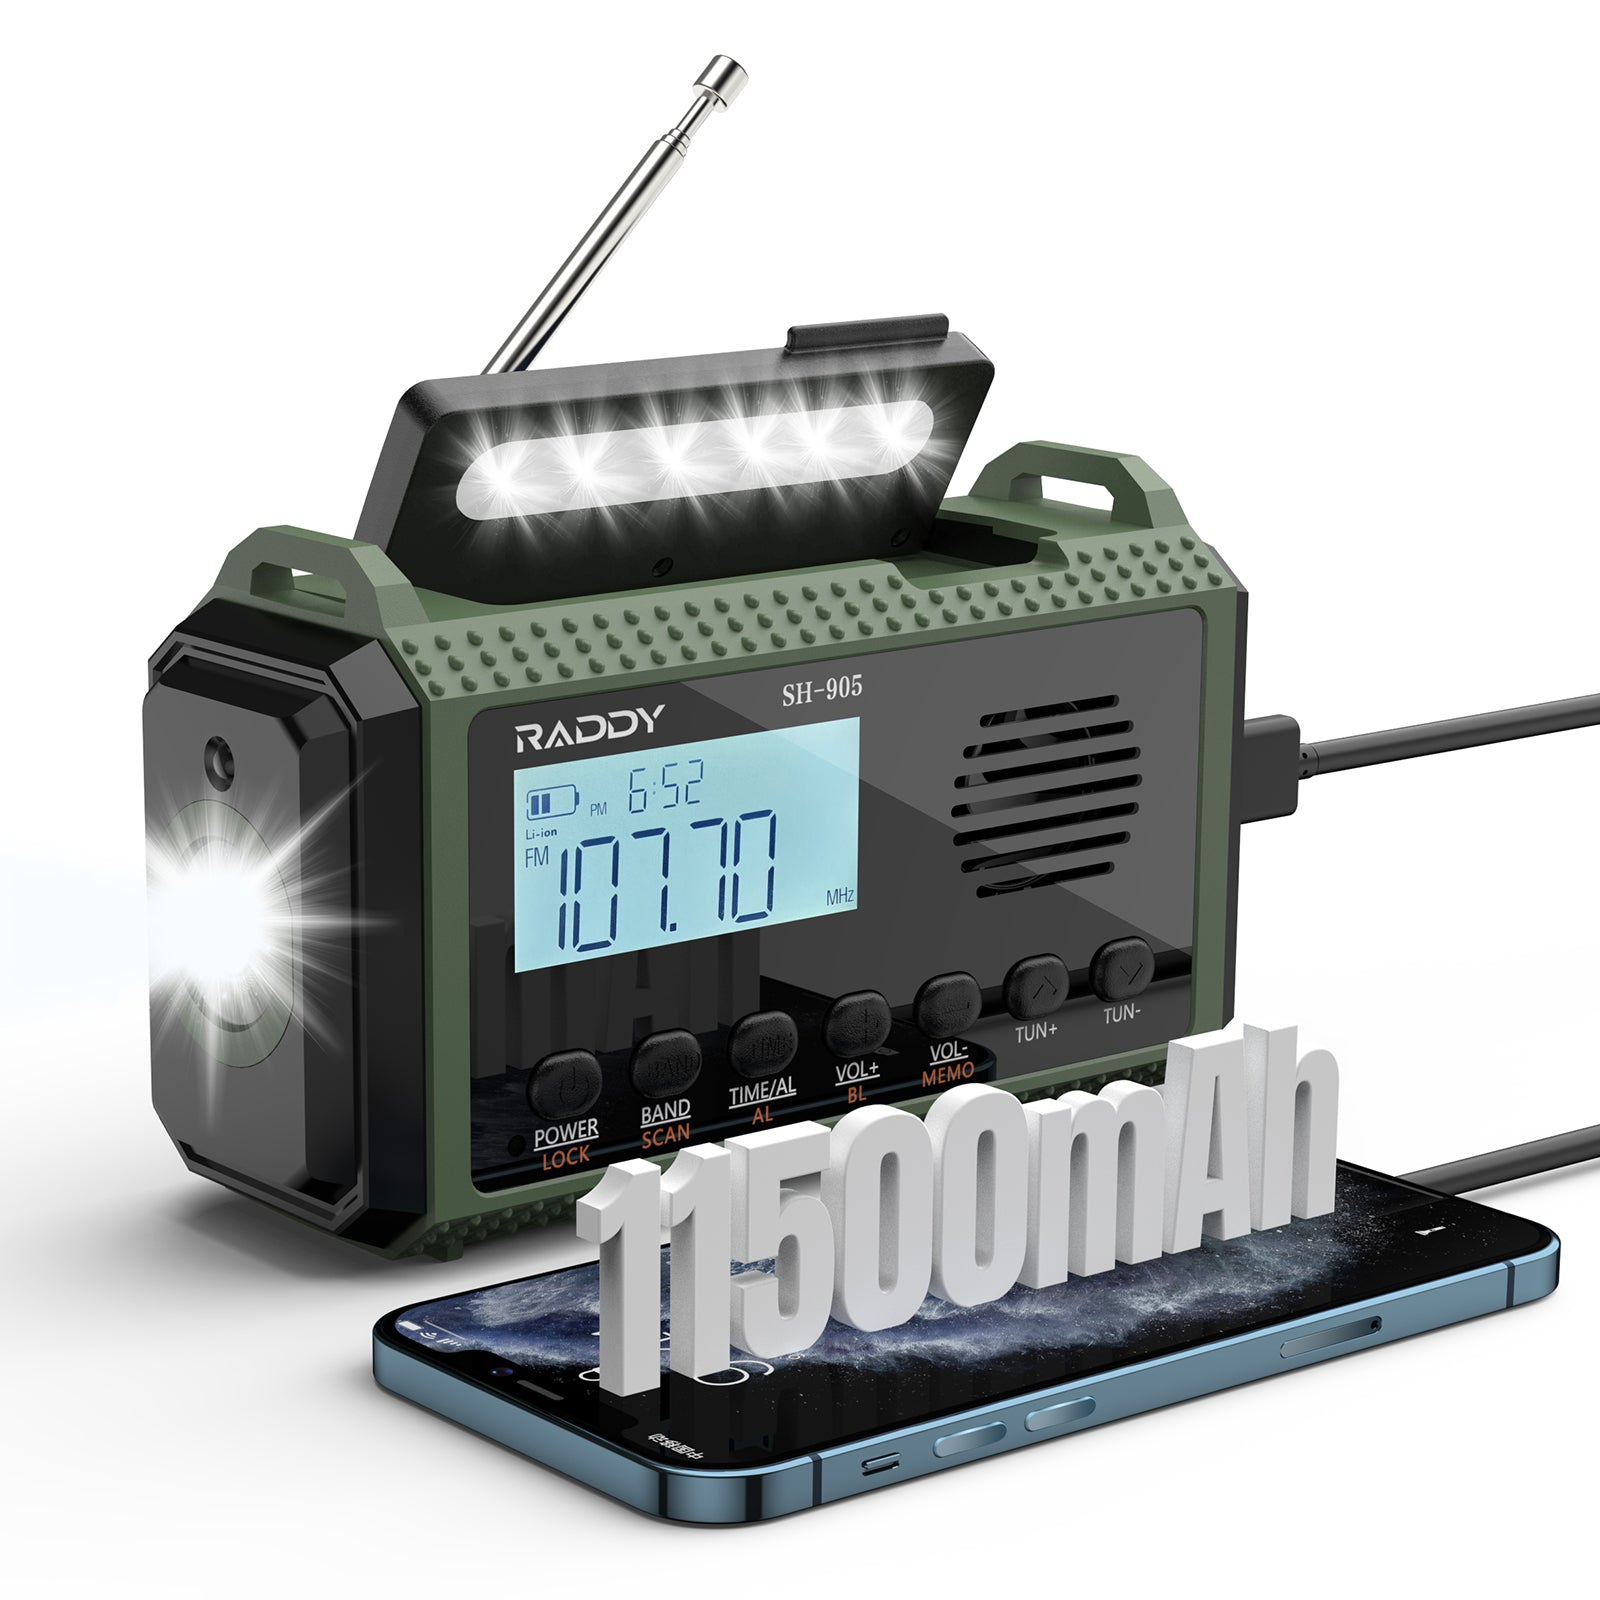 Emergency set PMR-Advanced: Albrecht Outdoor radios + crank radio